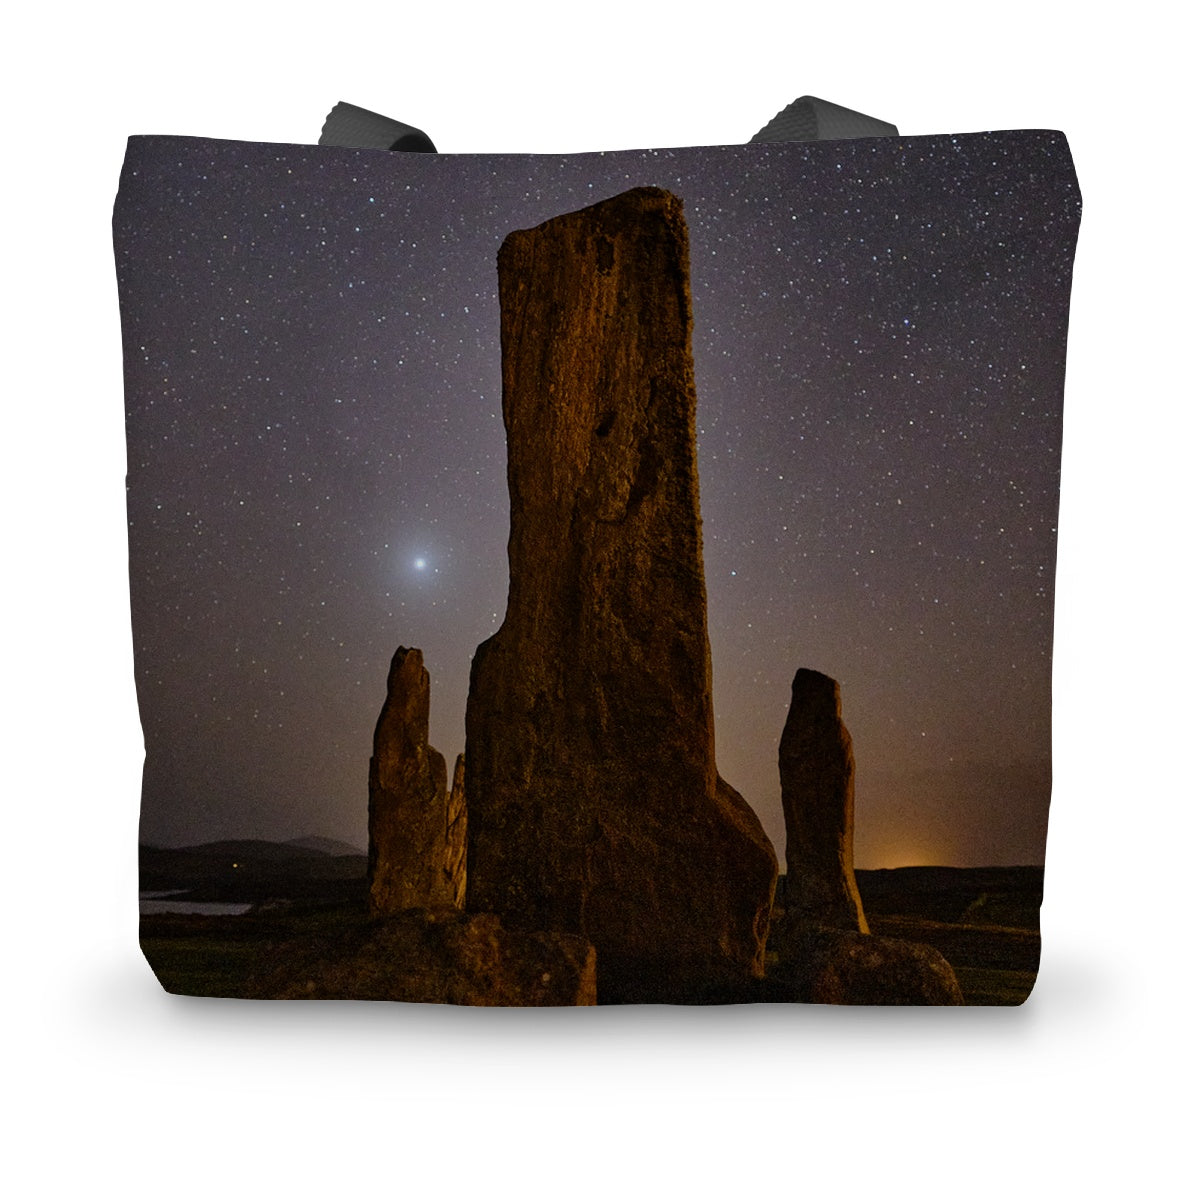 Callanish Standing Stones and Venus Canvas Tote Bag